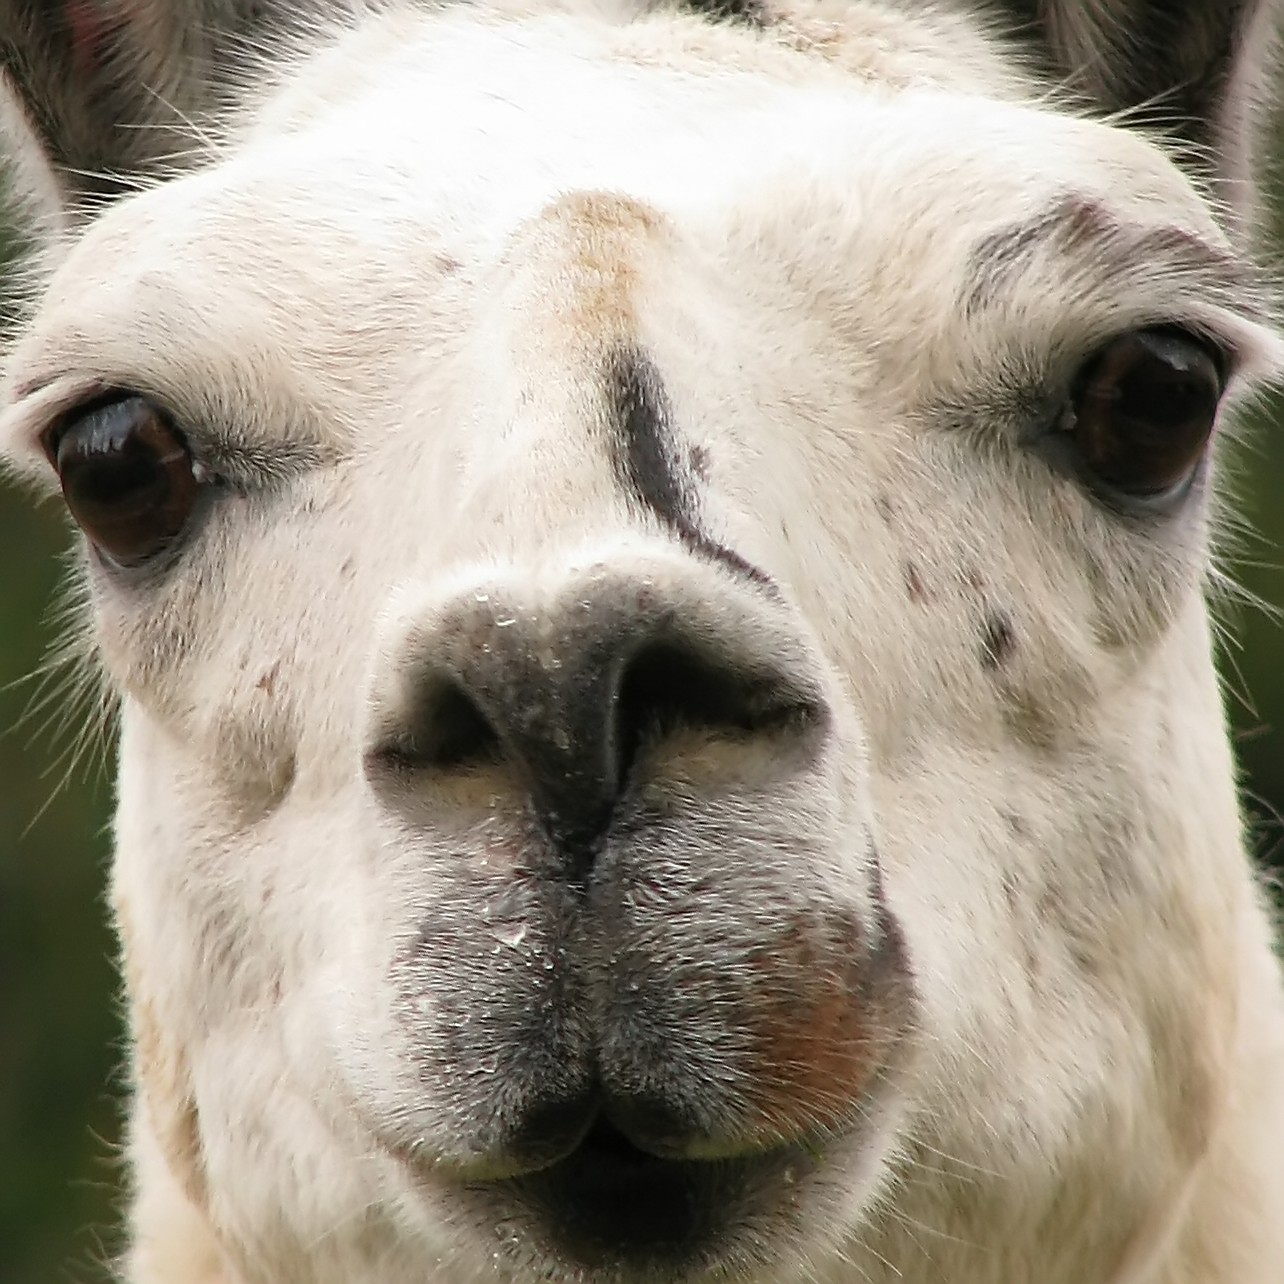 an alpaca close up looks into the camera